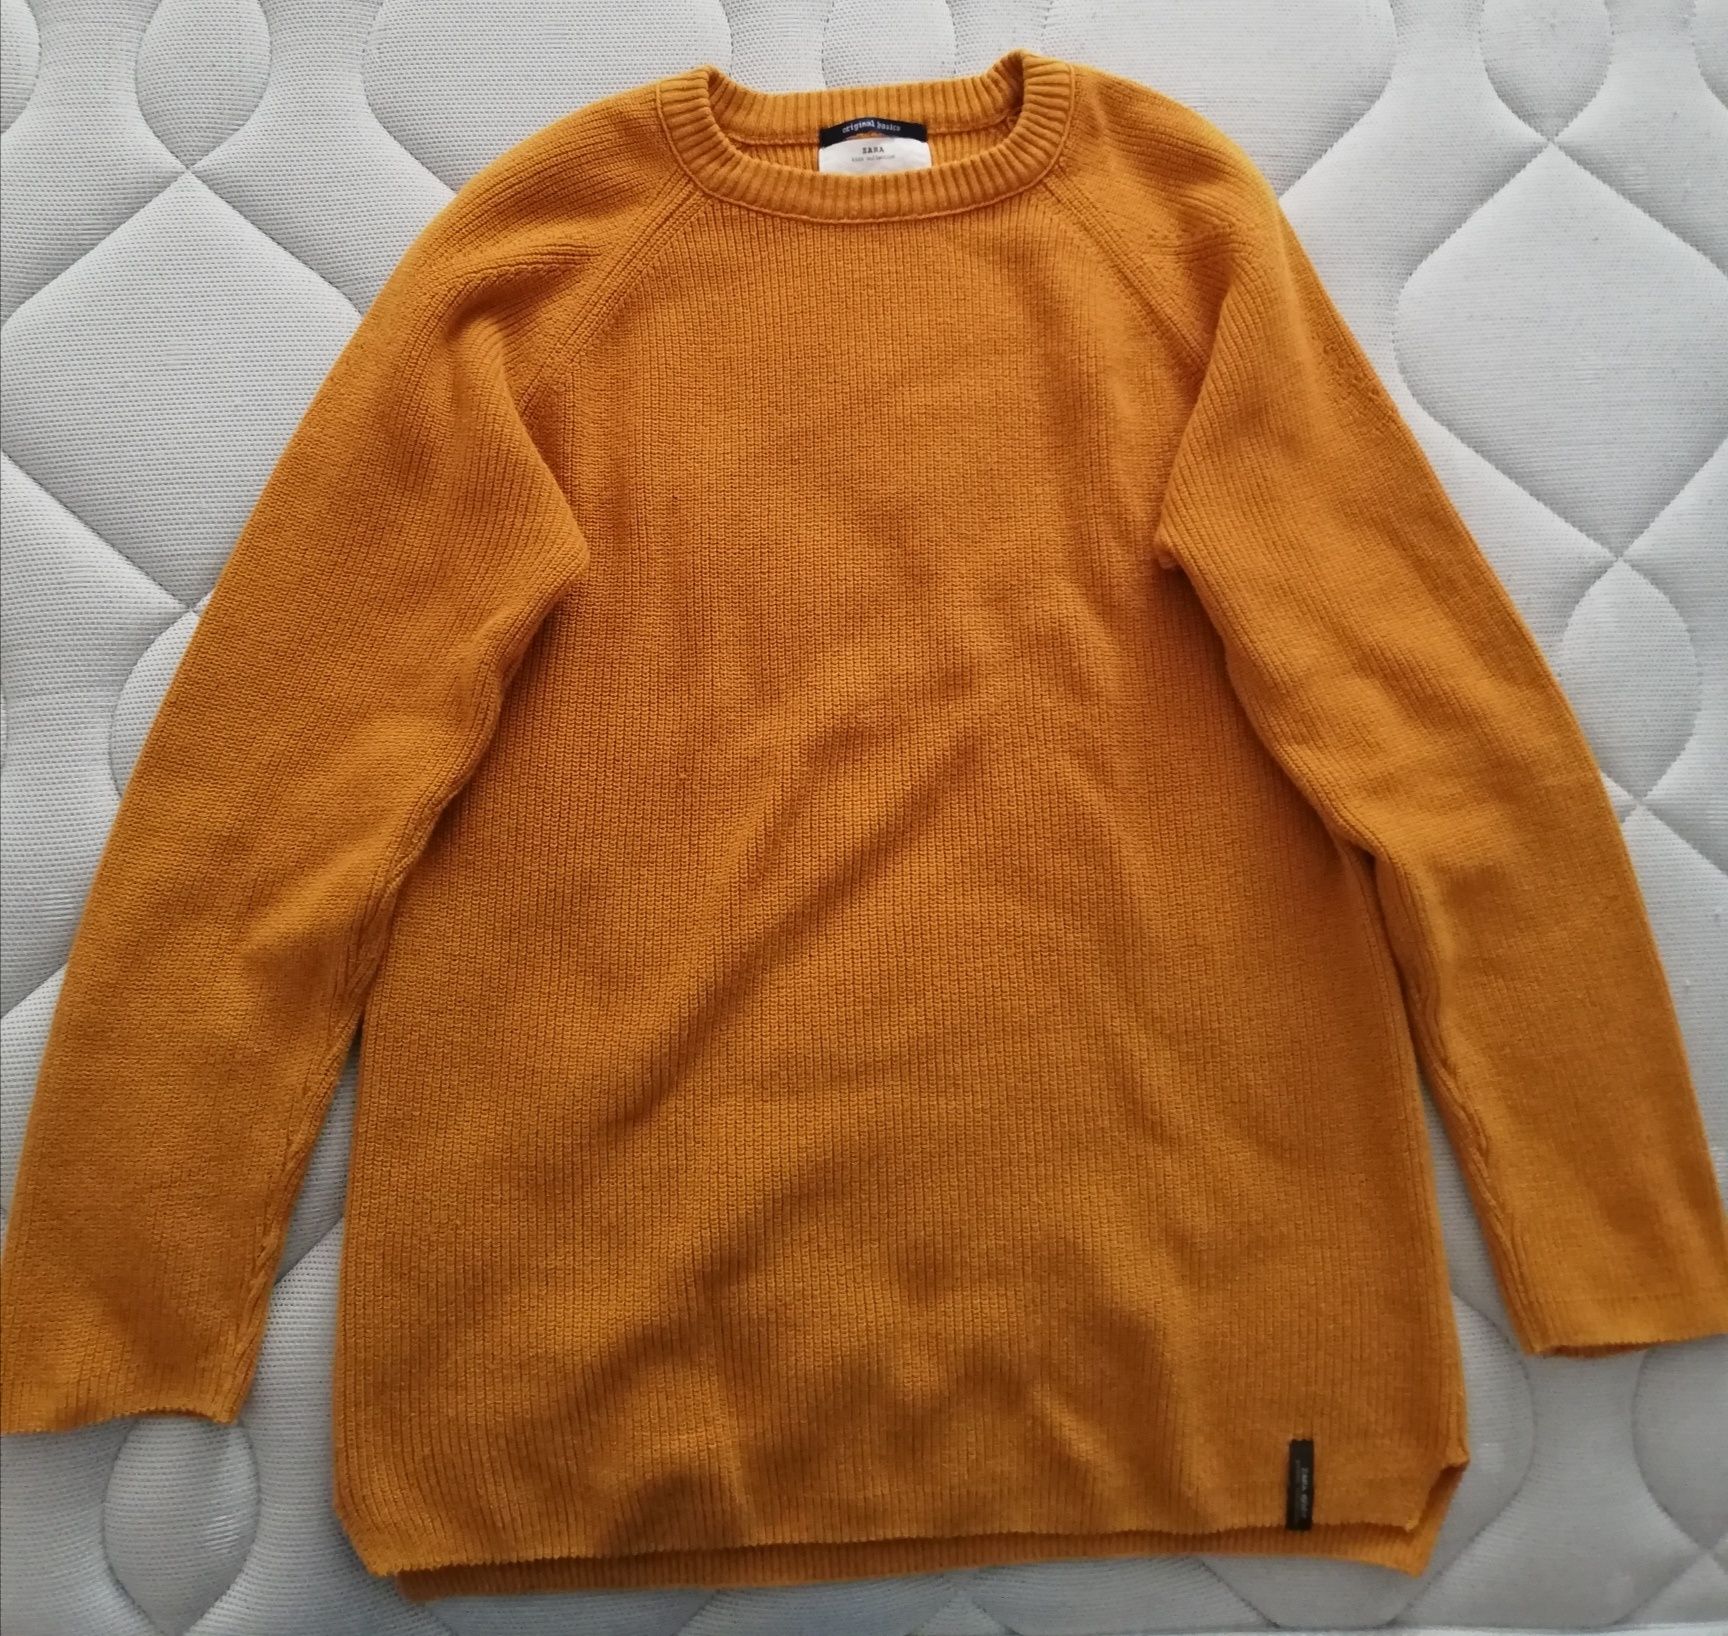 Camisola/sweater rapaz 10-12